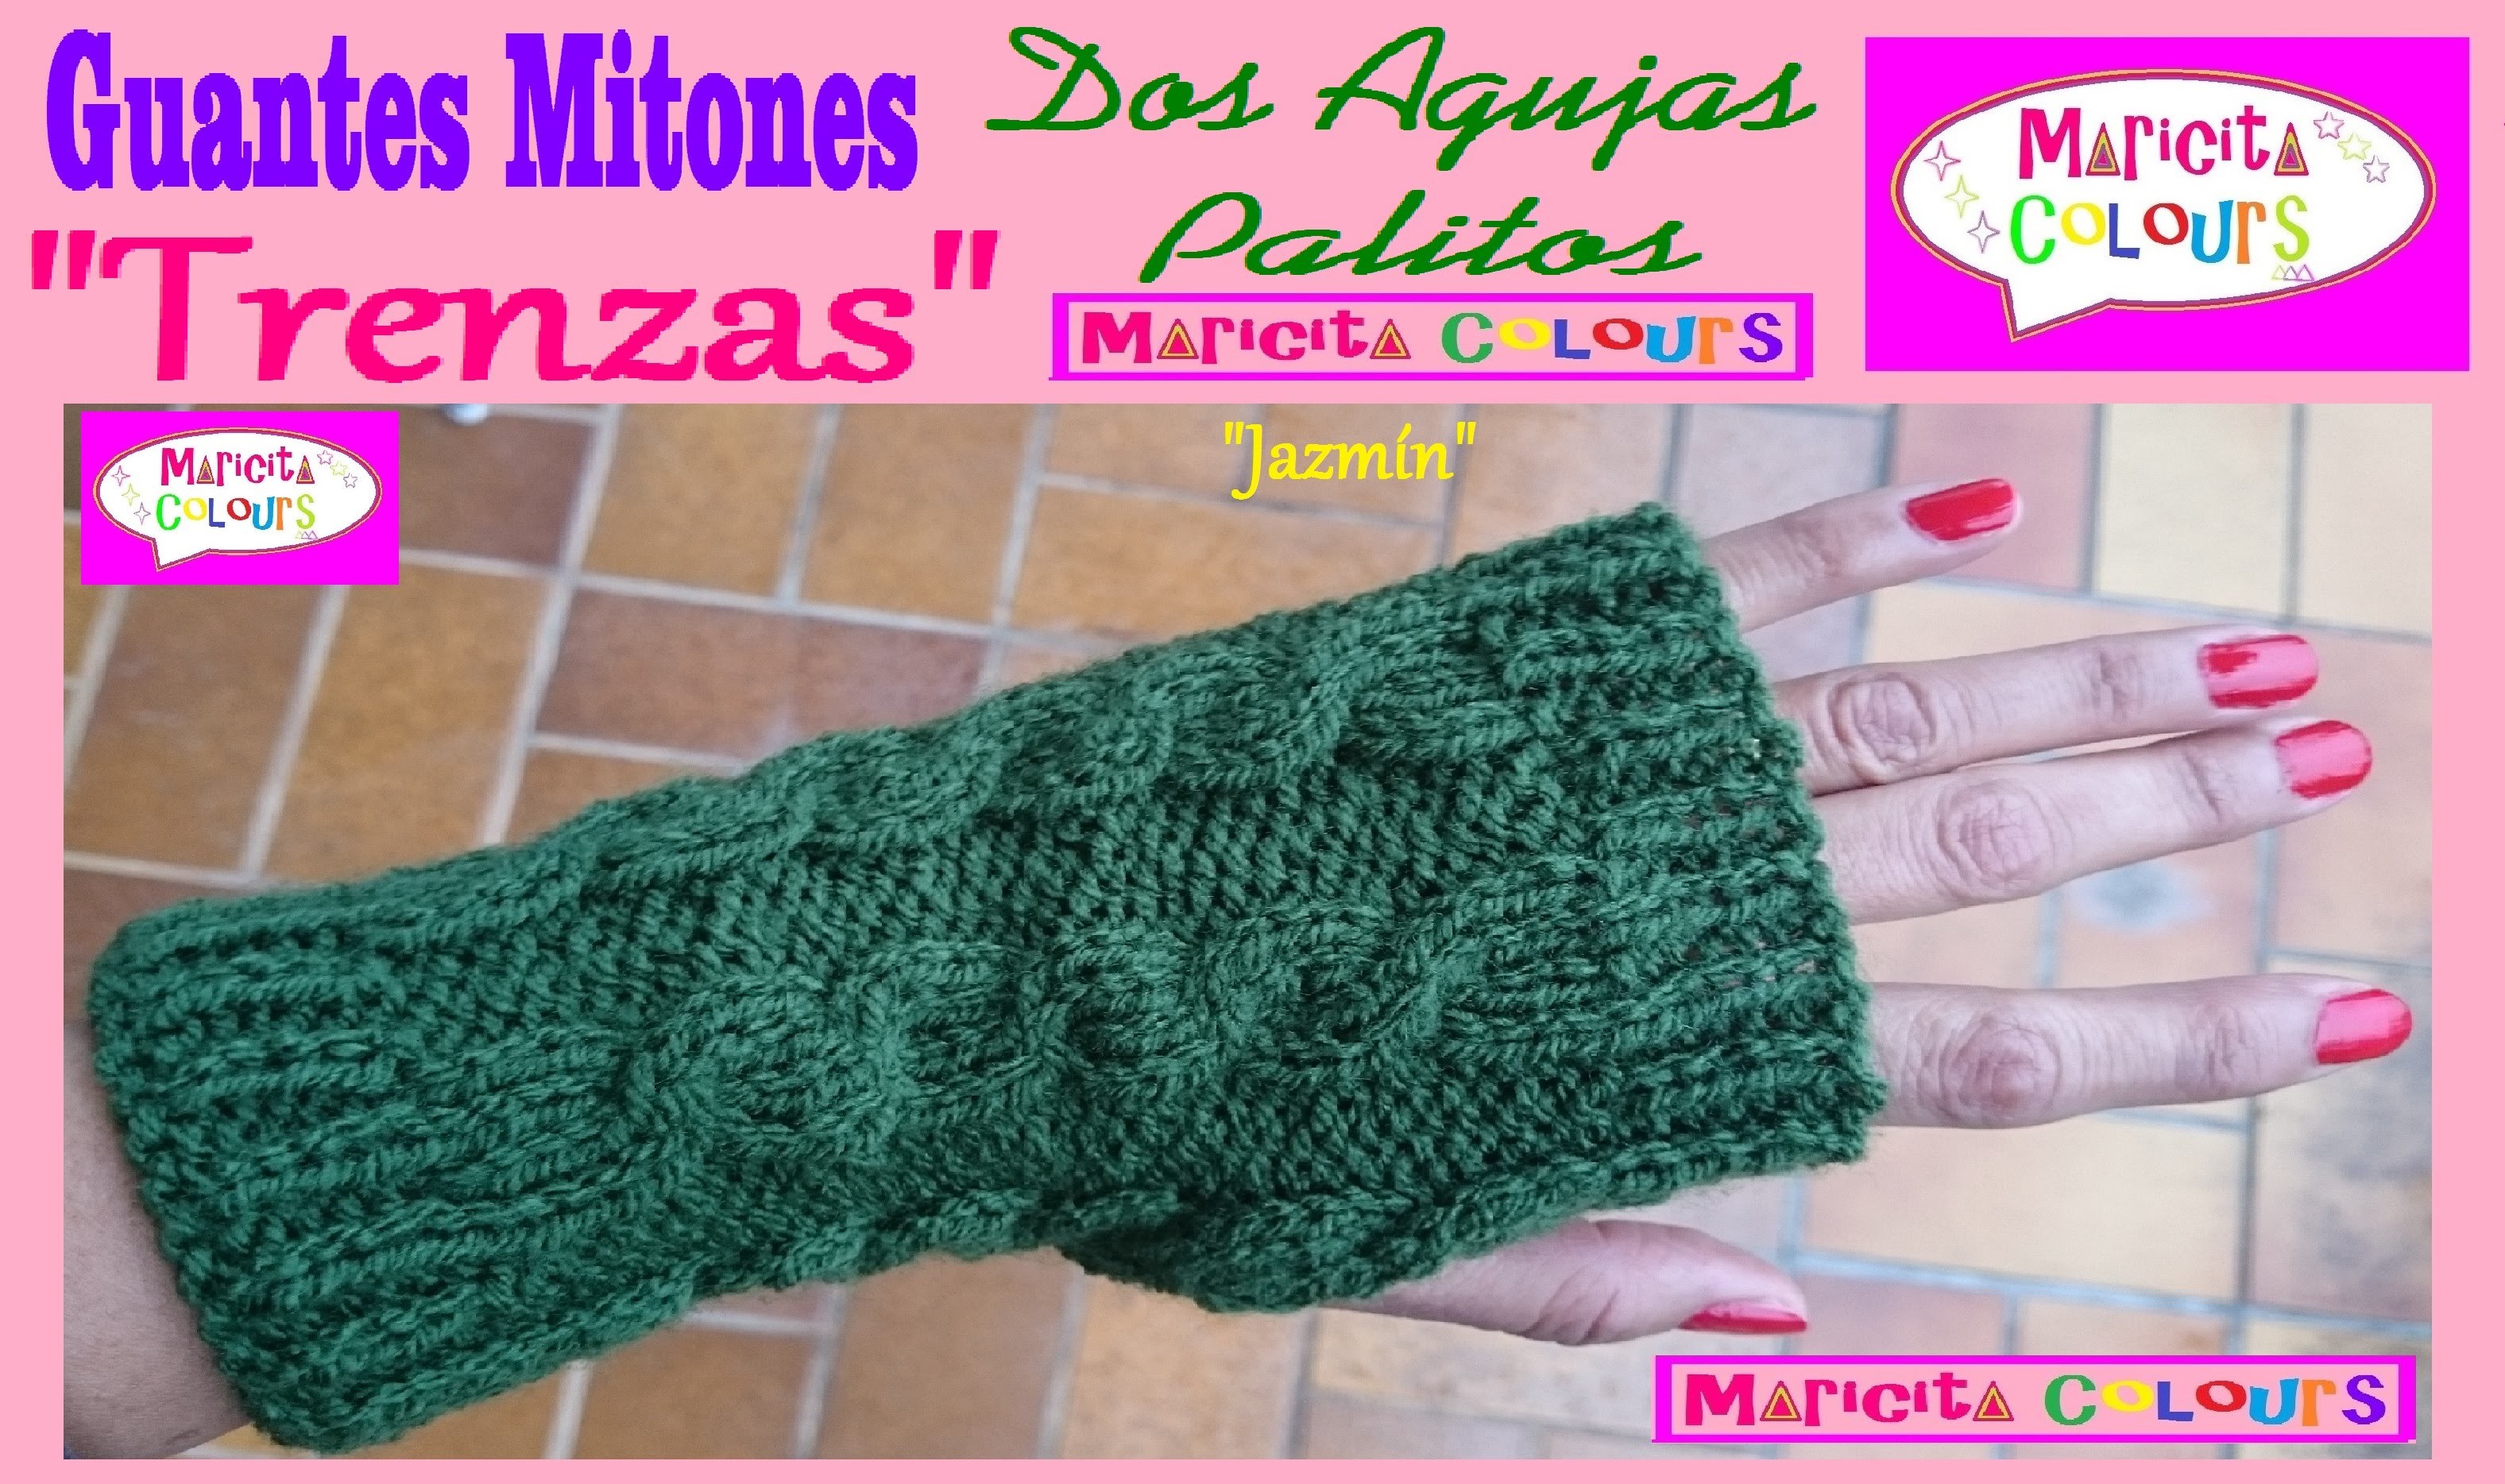 Mitones Guantes "Jazmín" con TRENZAS  Dos Agujas Palitos Tutorial por Maricita Colours